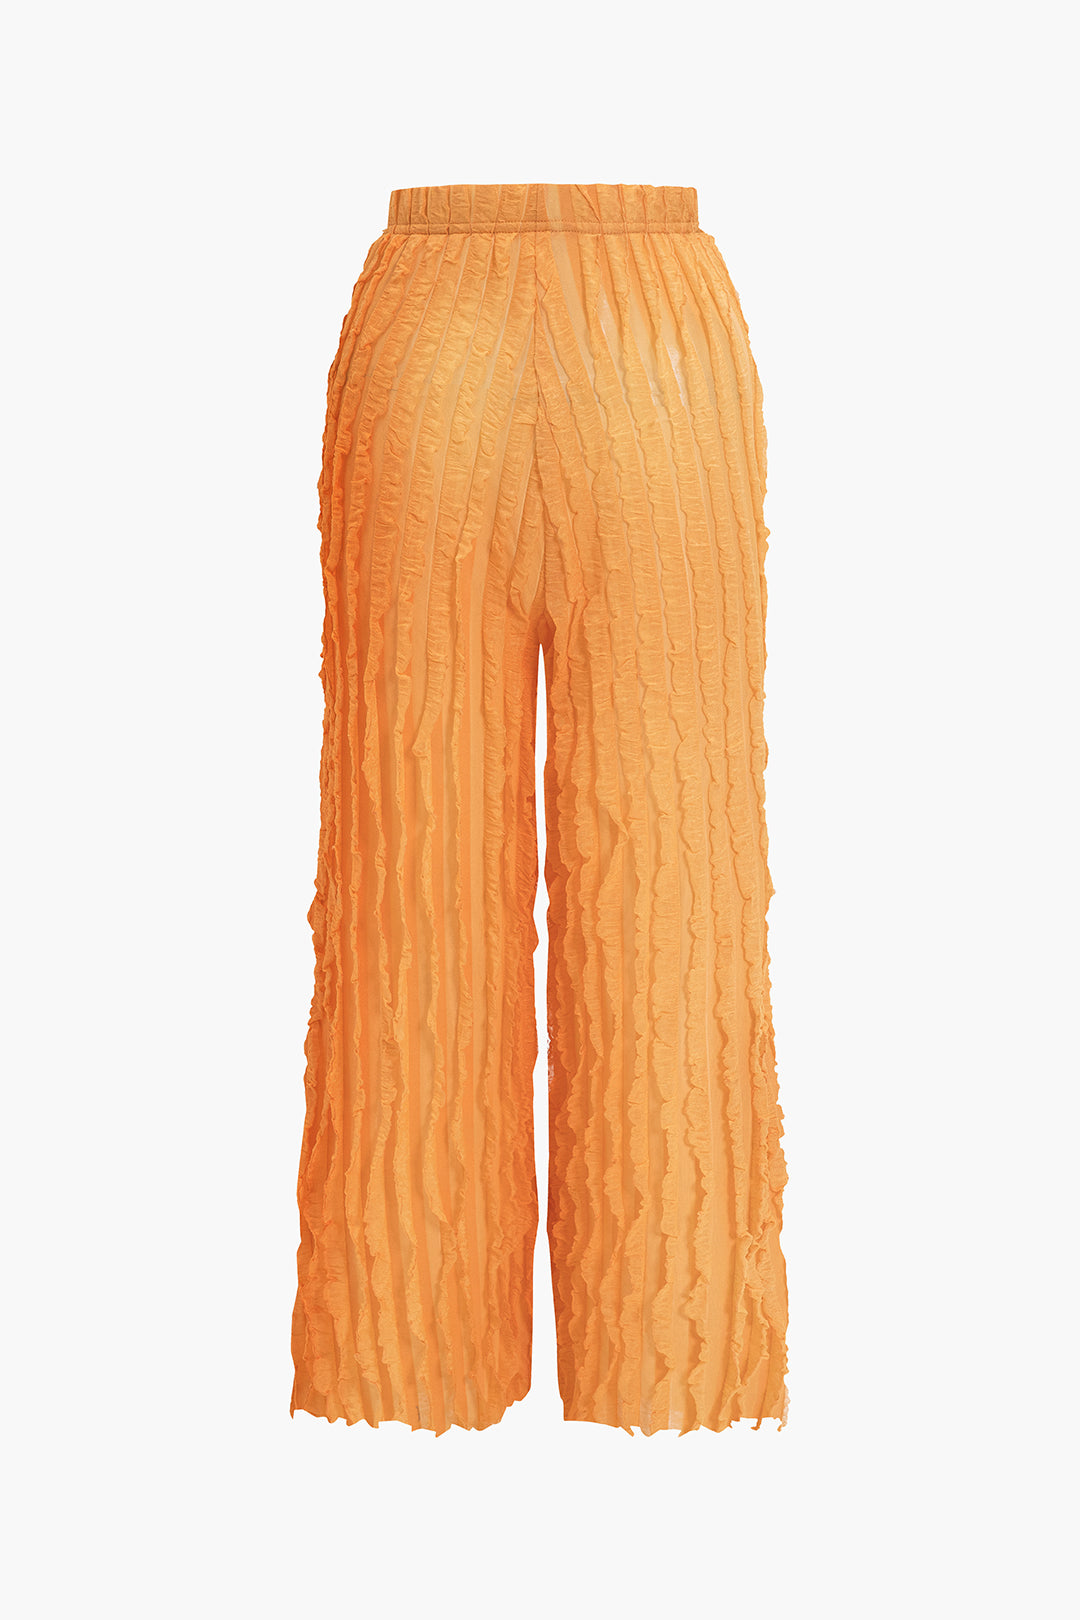 Ruffled Textured Halter Crop Top And Wide-Leg Pants Set